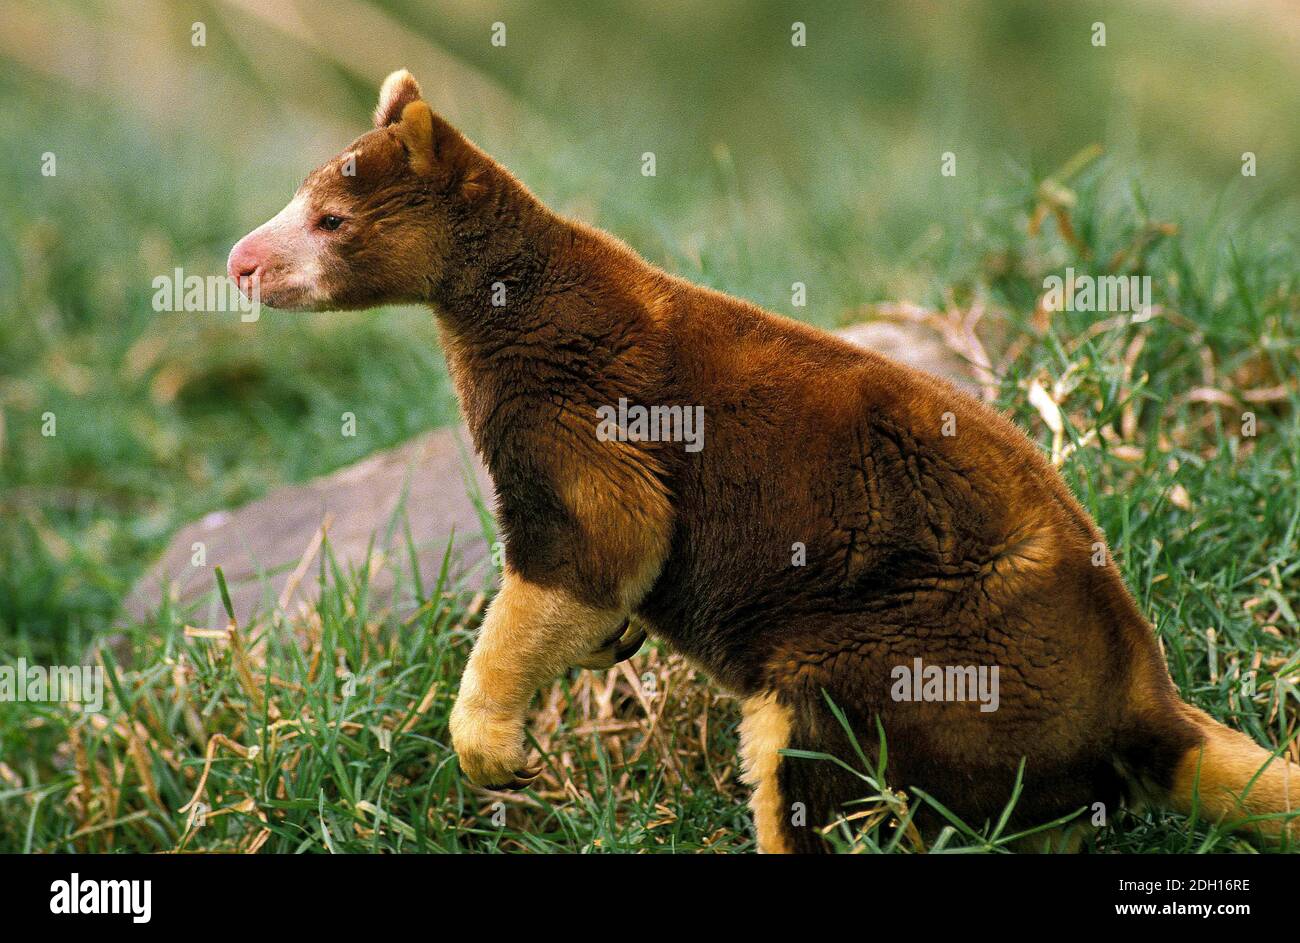 Albero di Matchie Kangaroo, dendrolagus matschiei, Adulti in piedi su erba Foto Stock